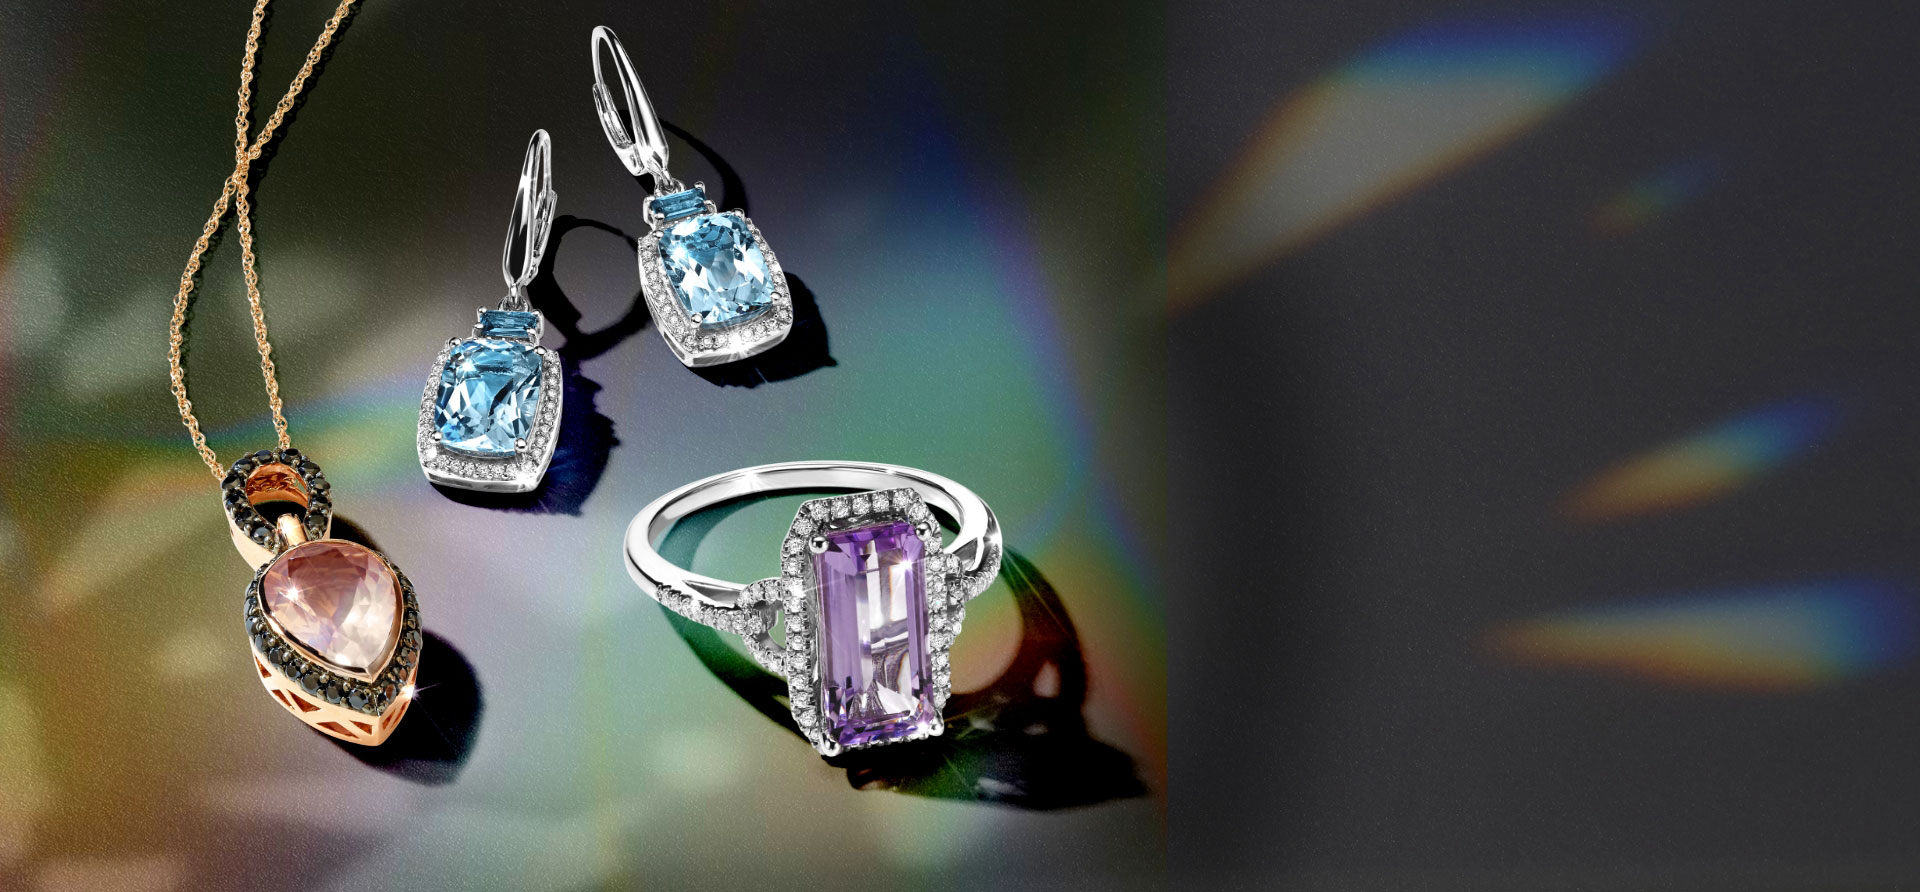 Celebrate PRIDE month with gemstone jewelry.